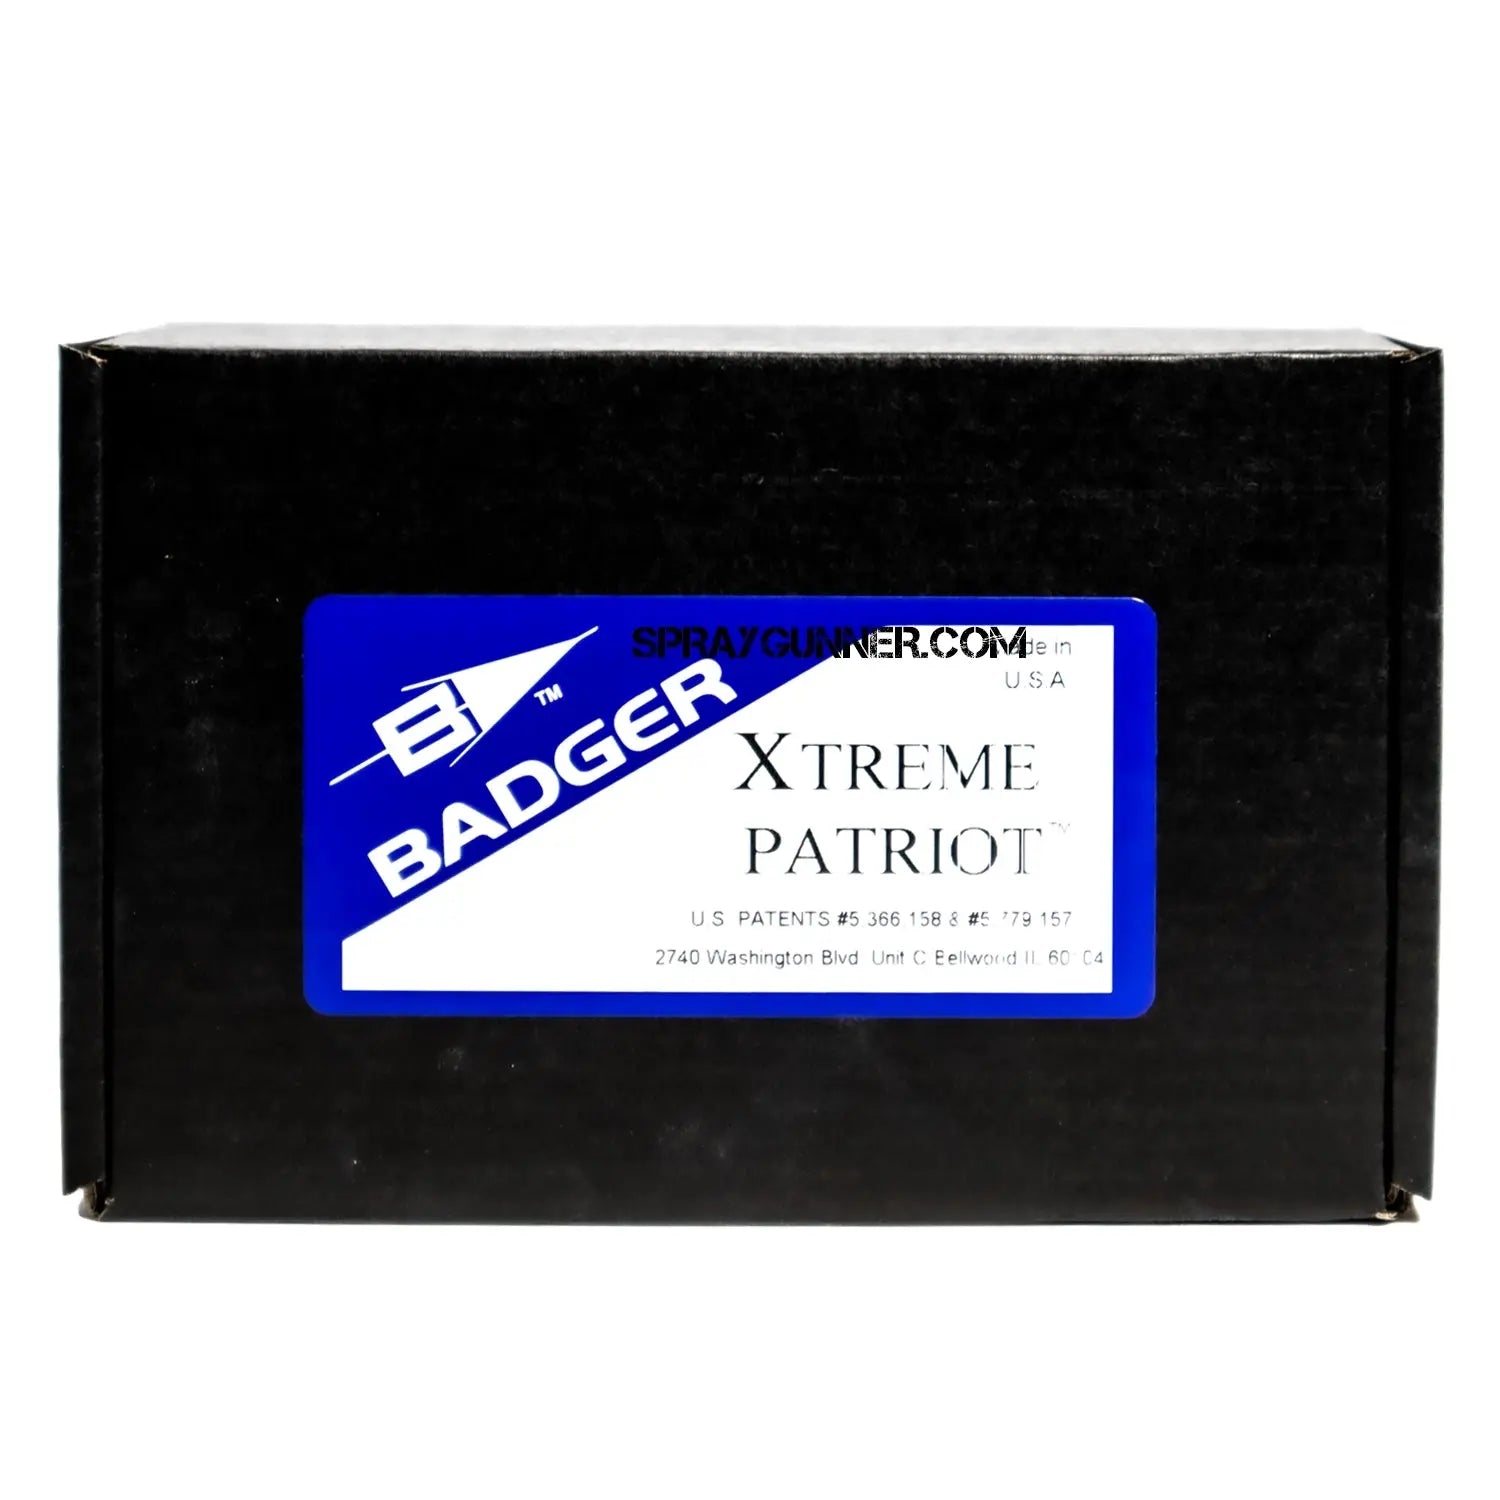 Badger Air Brush Co.  Xtreme Patriot 105 Badger